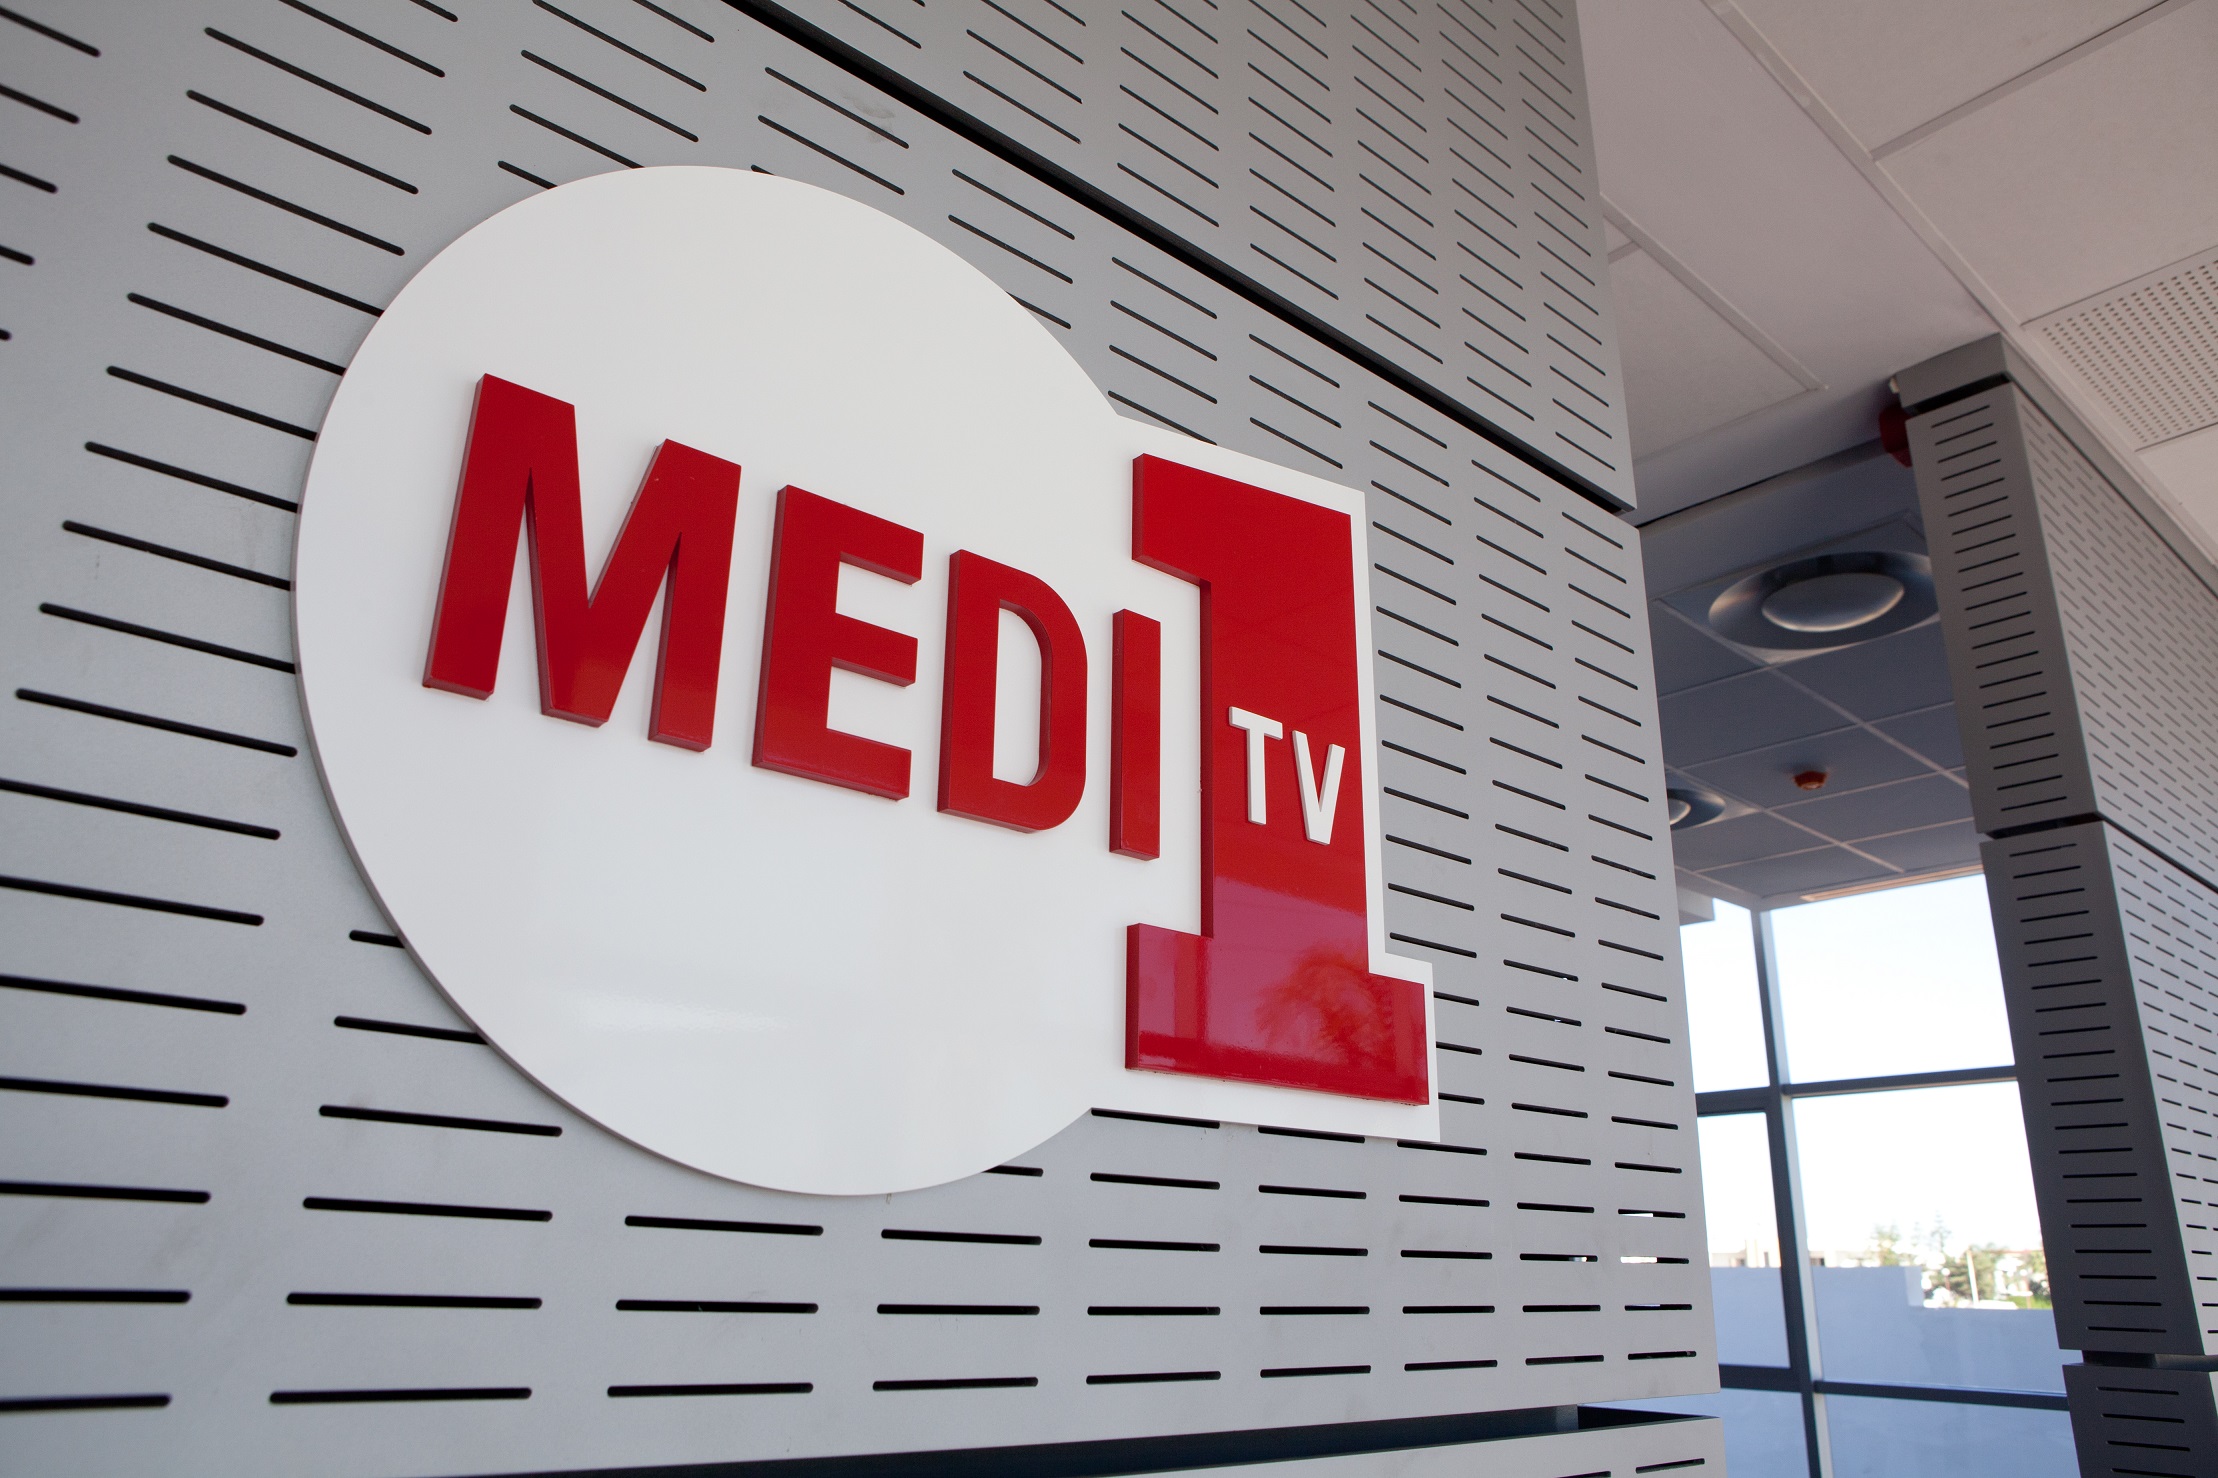 Médi1 tv